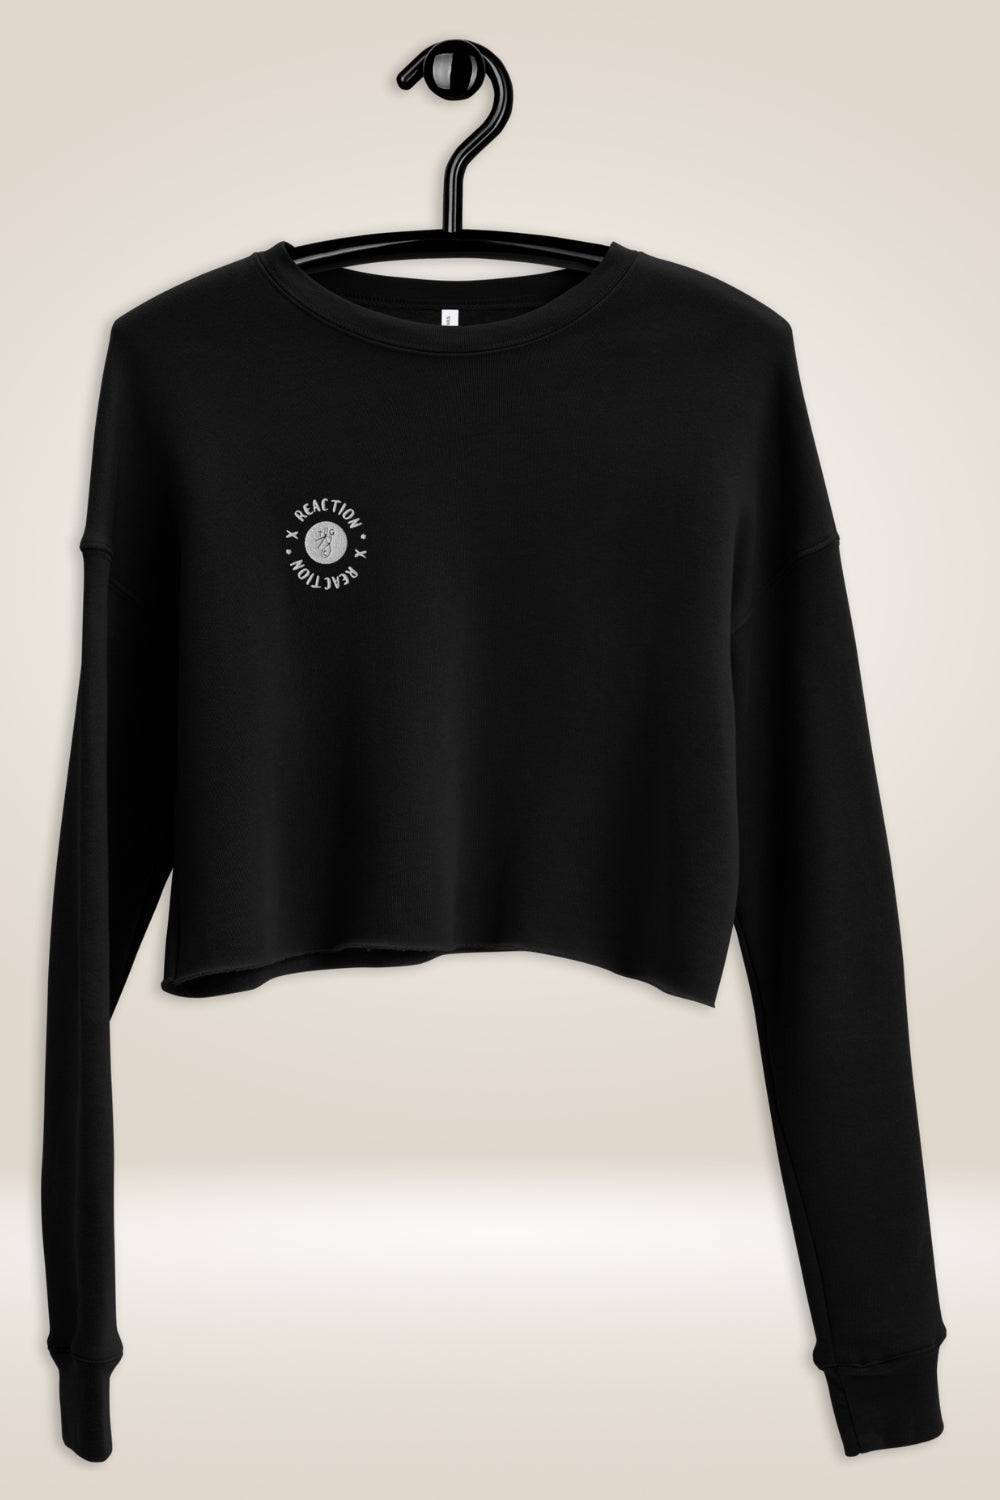 TGC X Reaction Black Cropped Sweatshirt - TGC Boutique - Cropped Sweatshirt